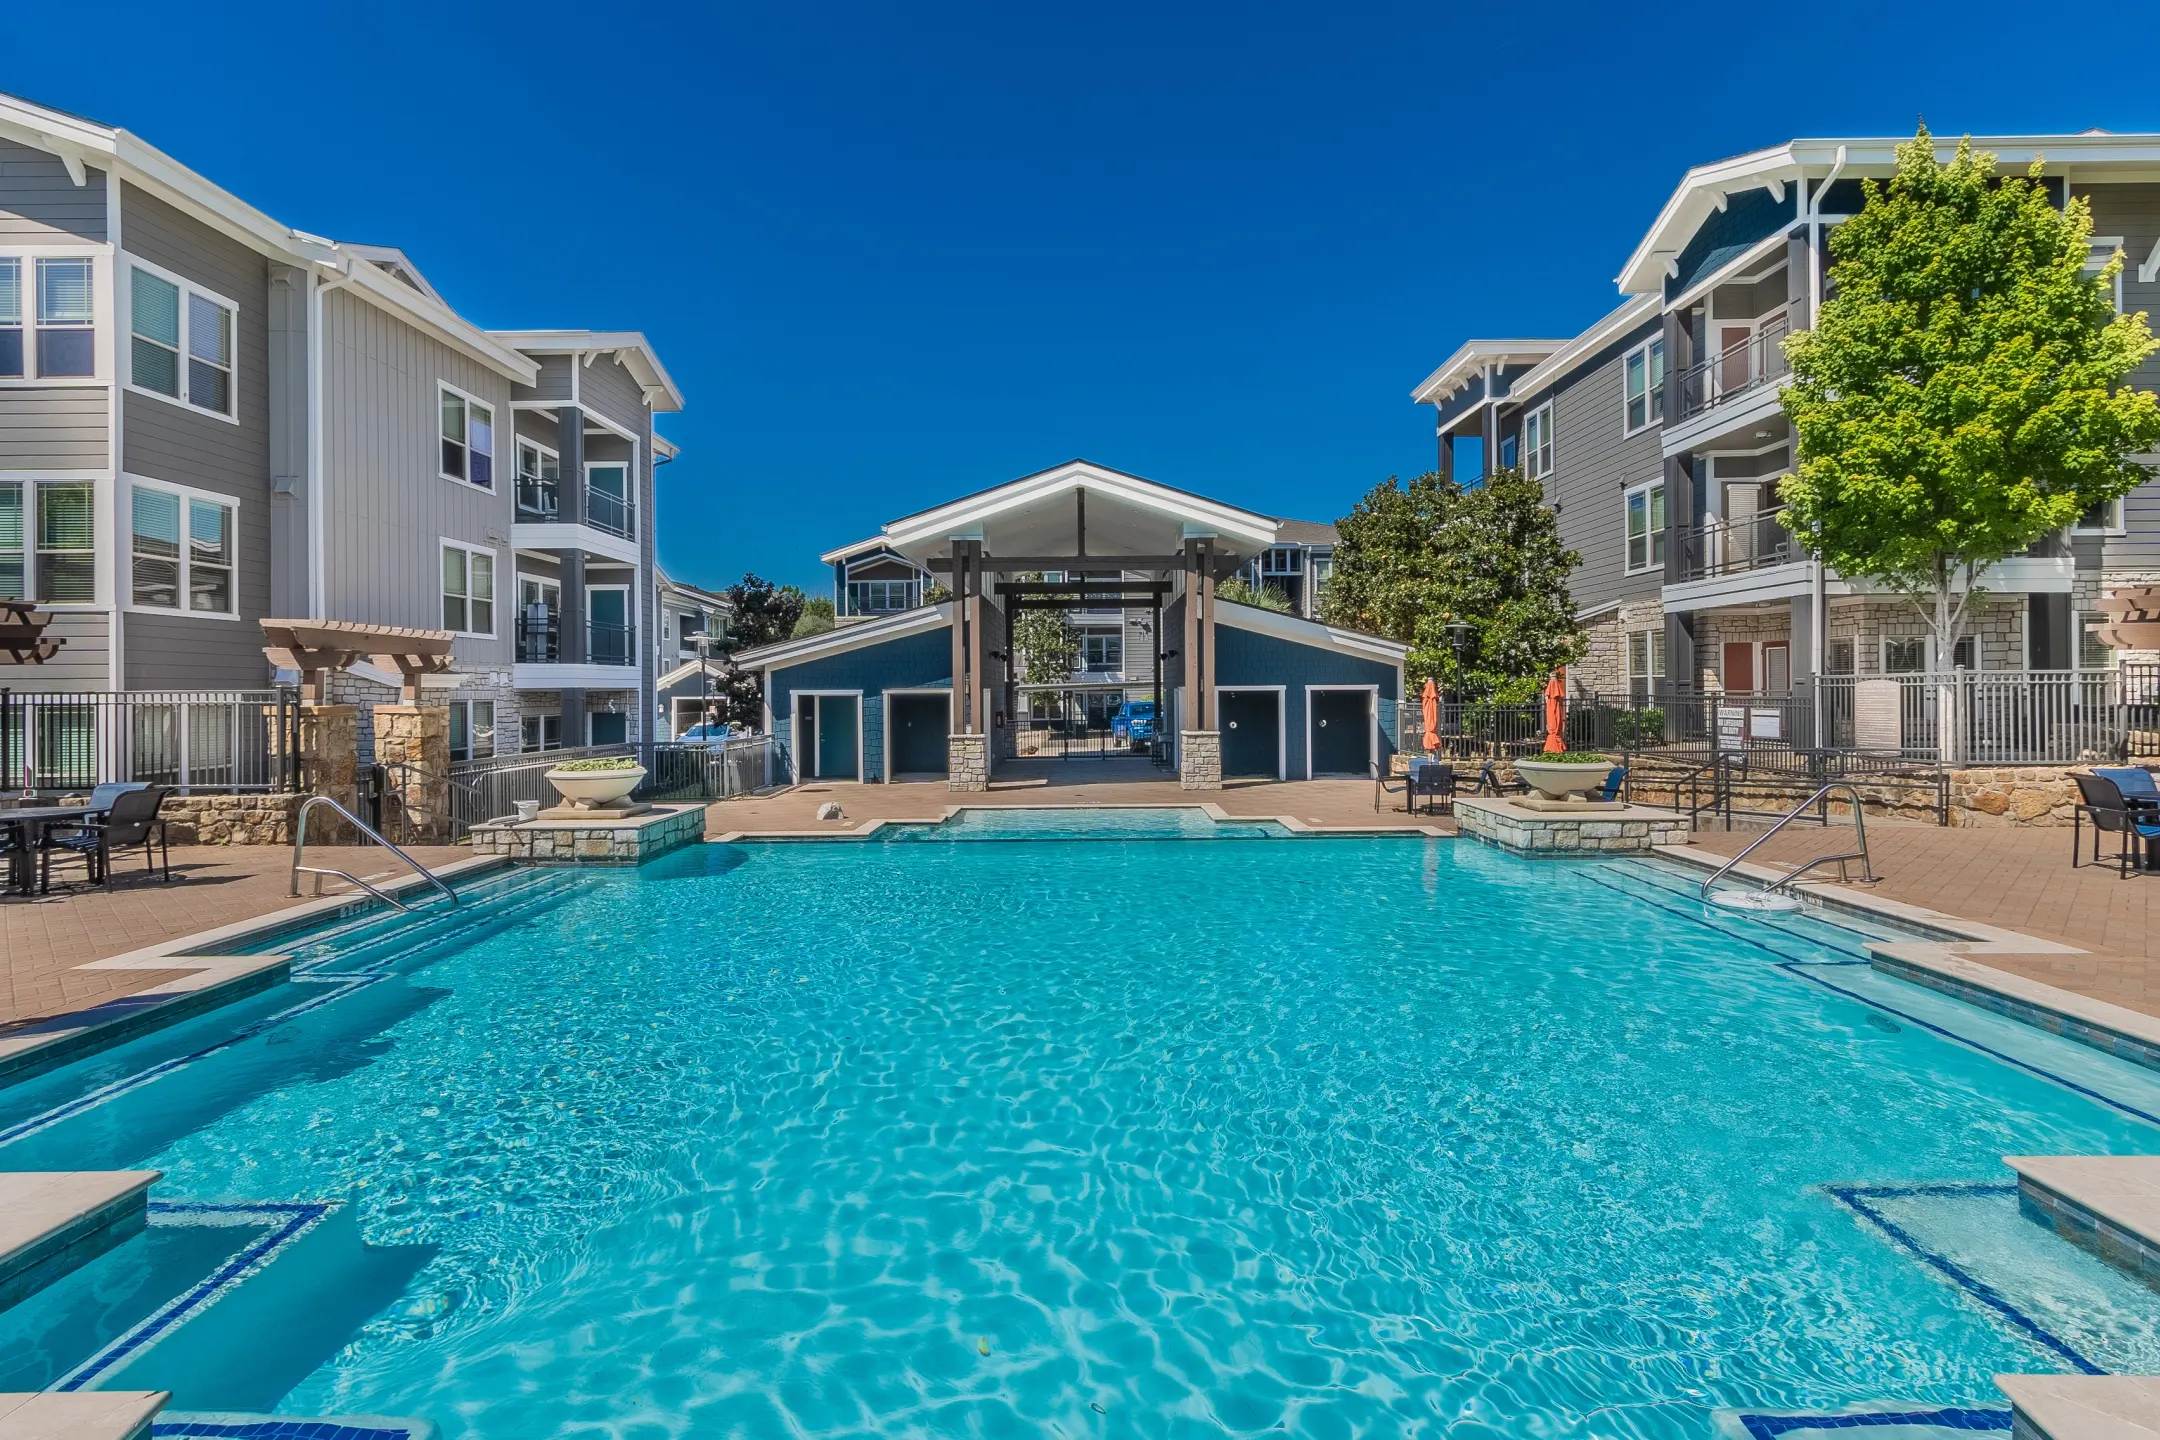 Pool - Lakewood Flats Apartments - Dallas, TX